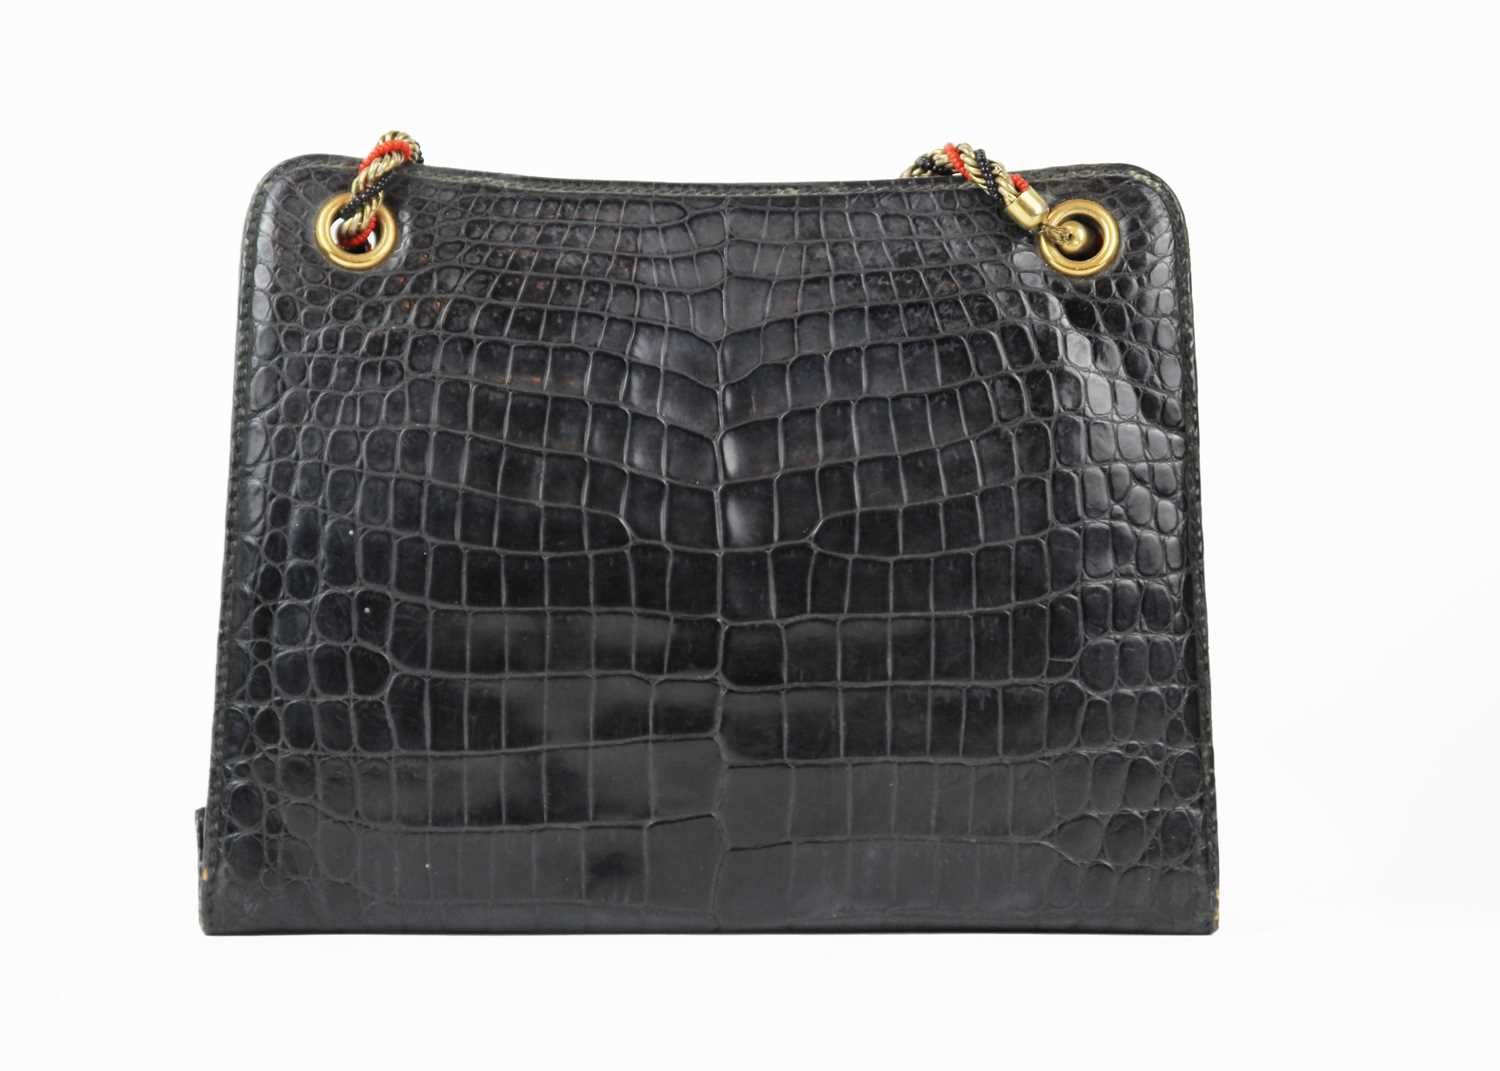 A Gucci Crocodile handbag - Image 4 of 6